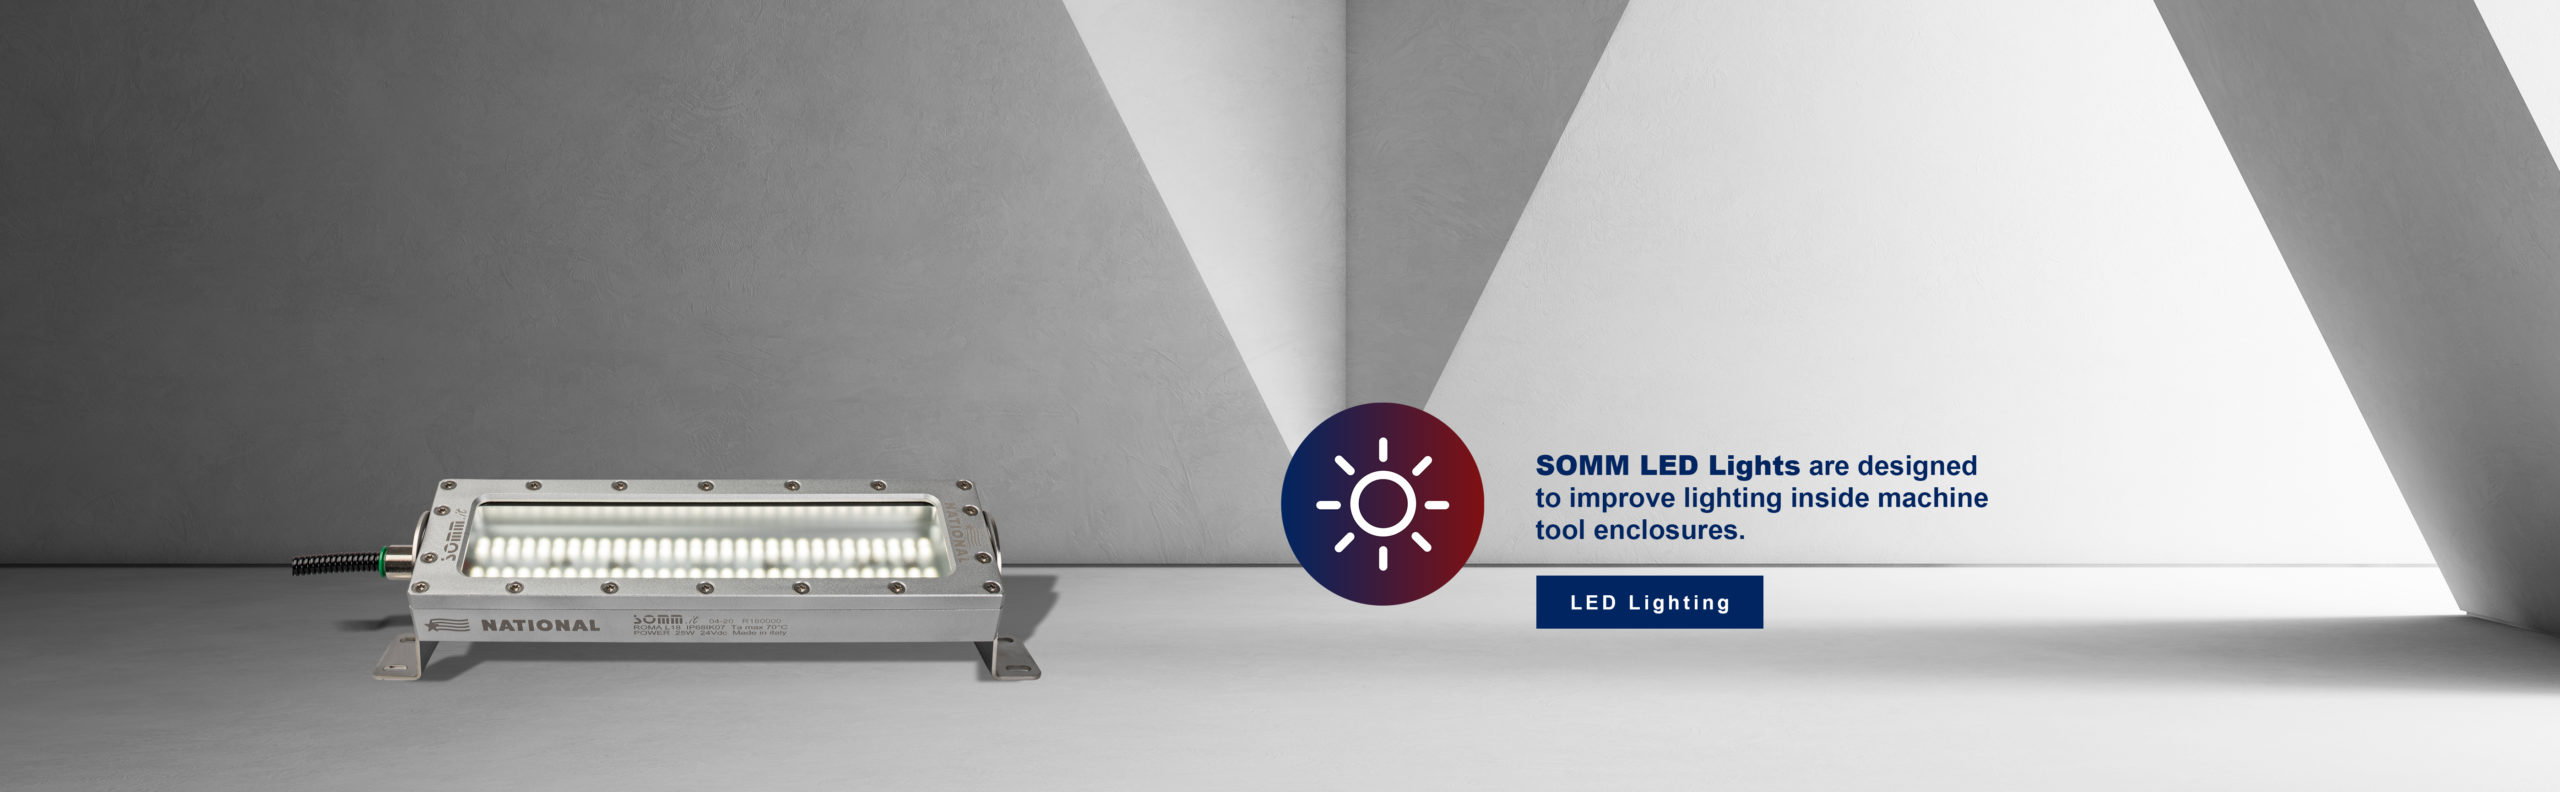 LED lighting page header